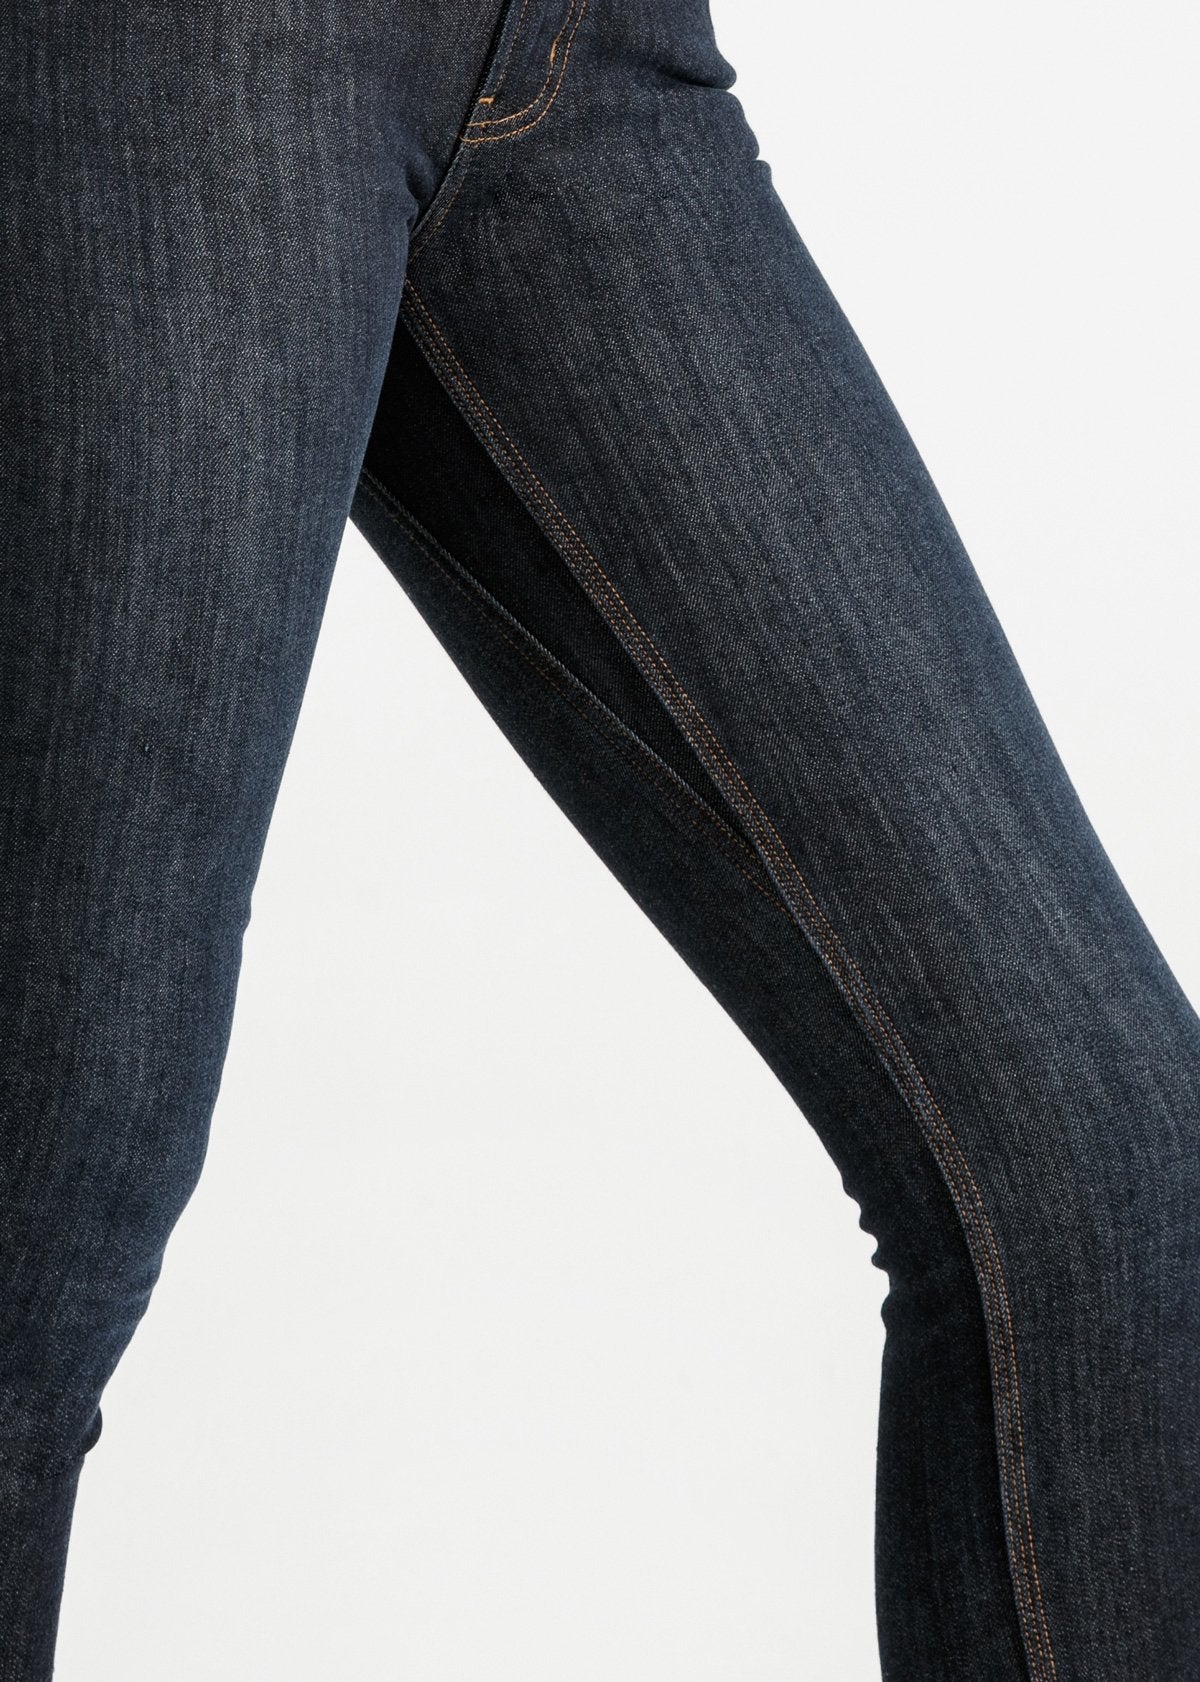 LEVI'S Taper Tapered Fit Women Dark Blue Jeans